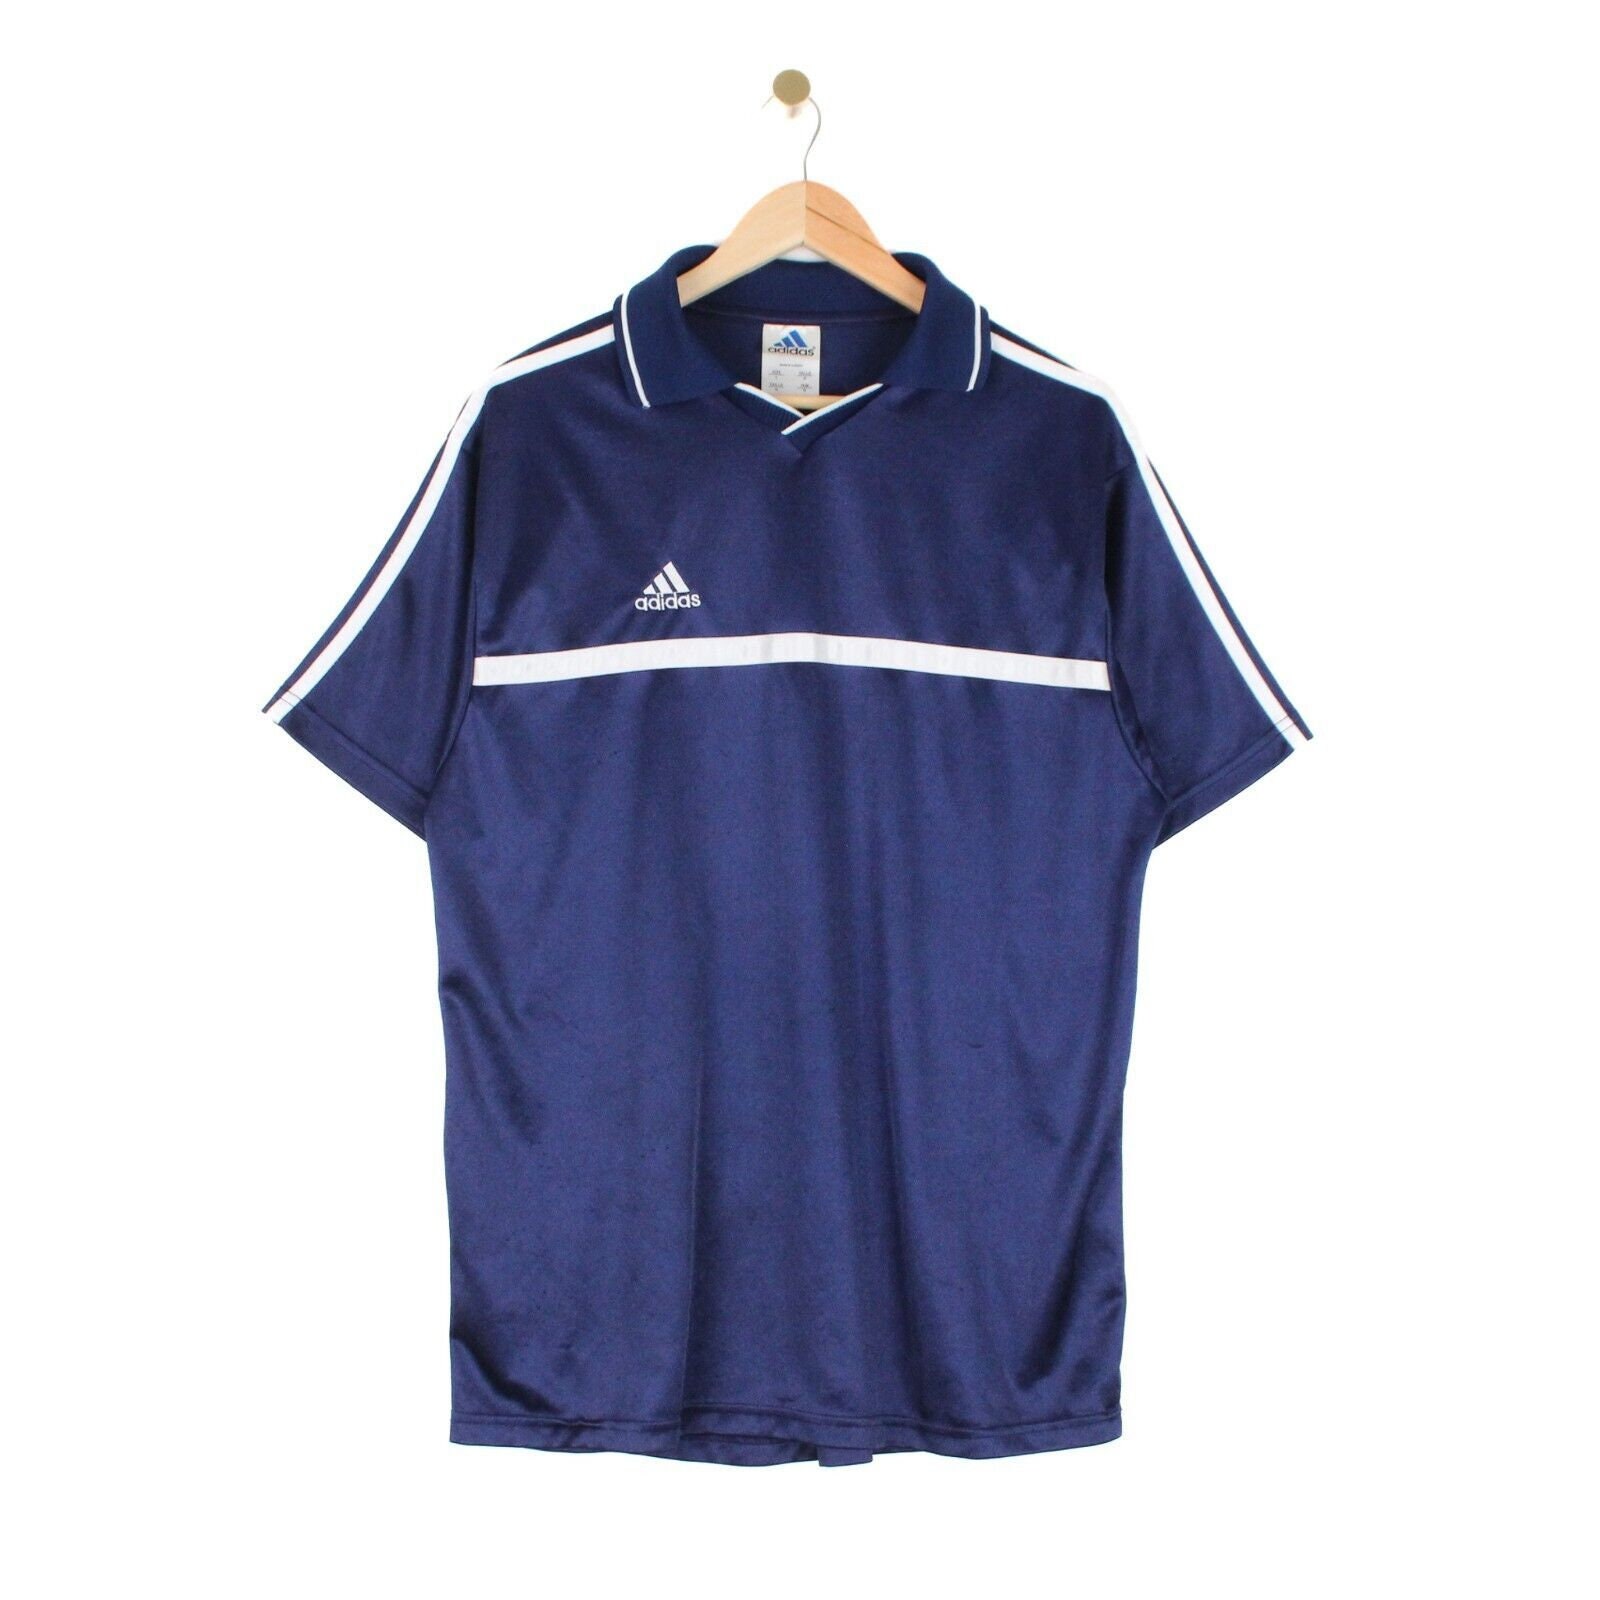 Vintage Adidas Polo Shirt Polyester 90s Retro Collared Blue - Etsy